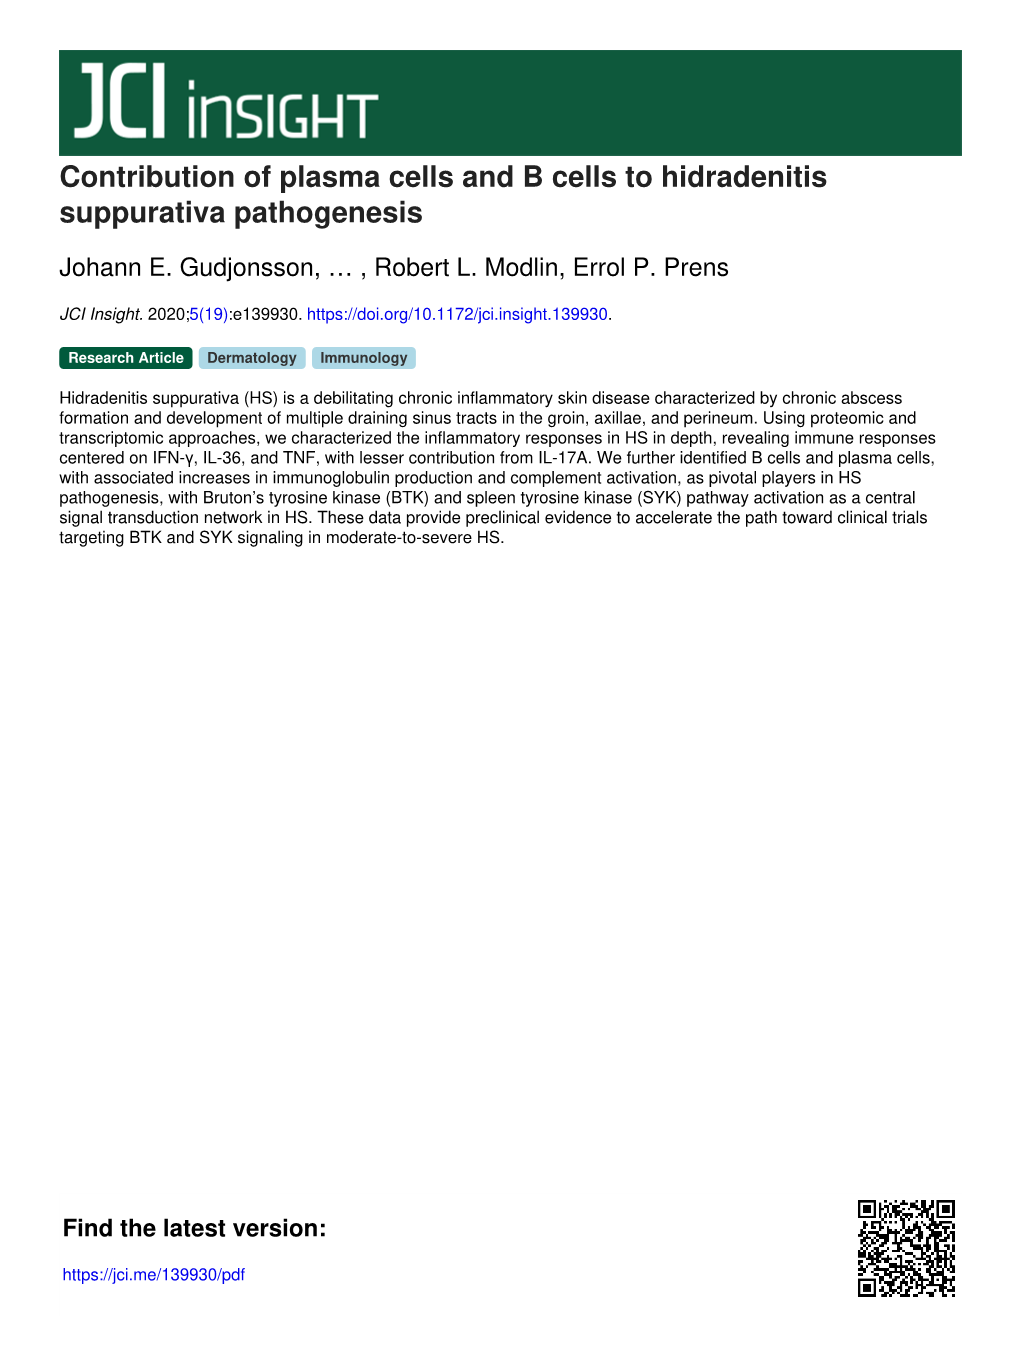 Contribution of Plasma Cells and B Cells to Hidradenitis Suppurativa Pathogenesis